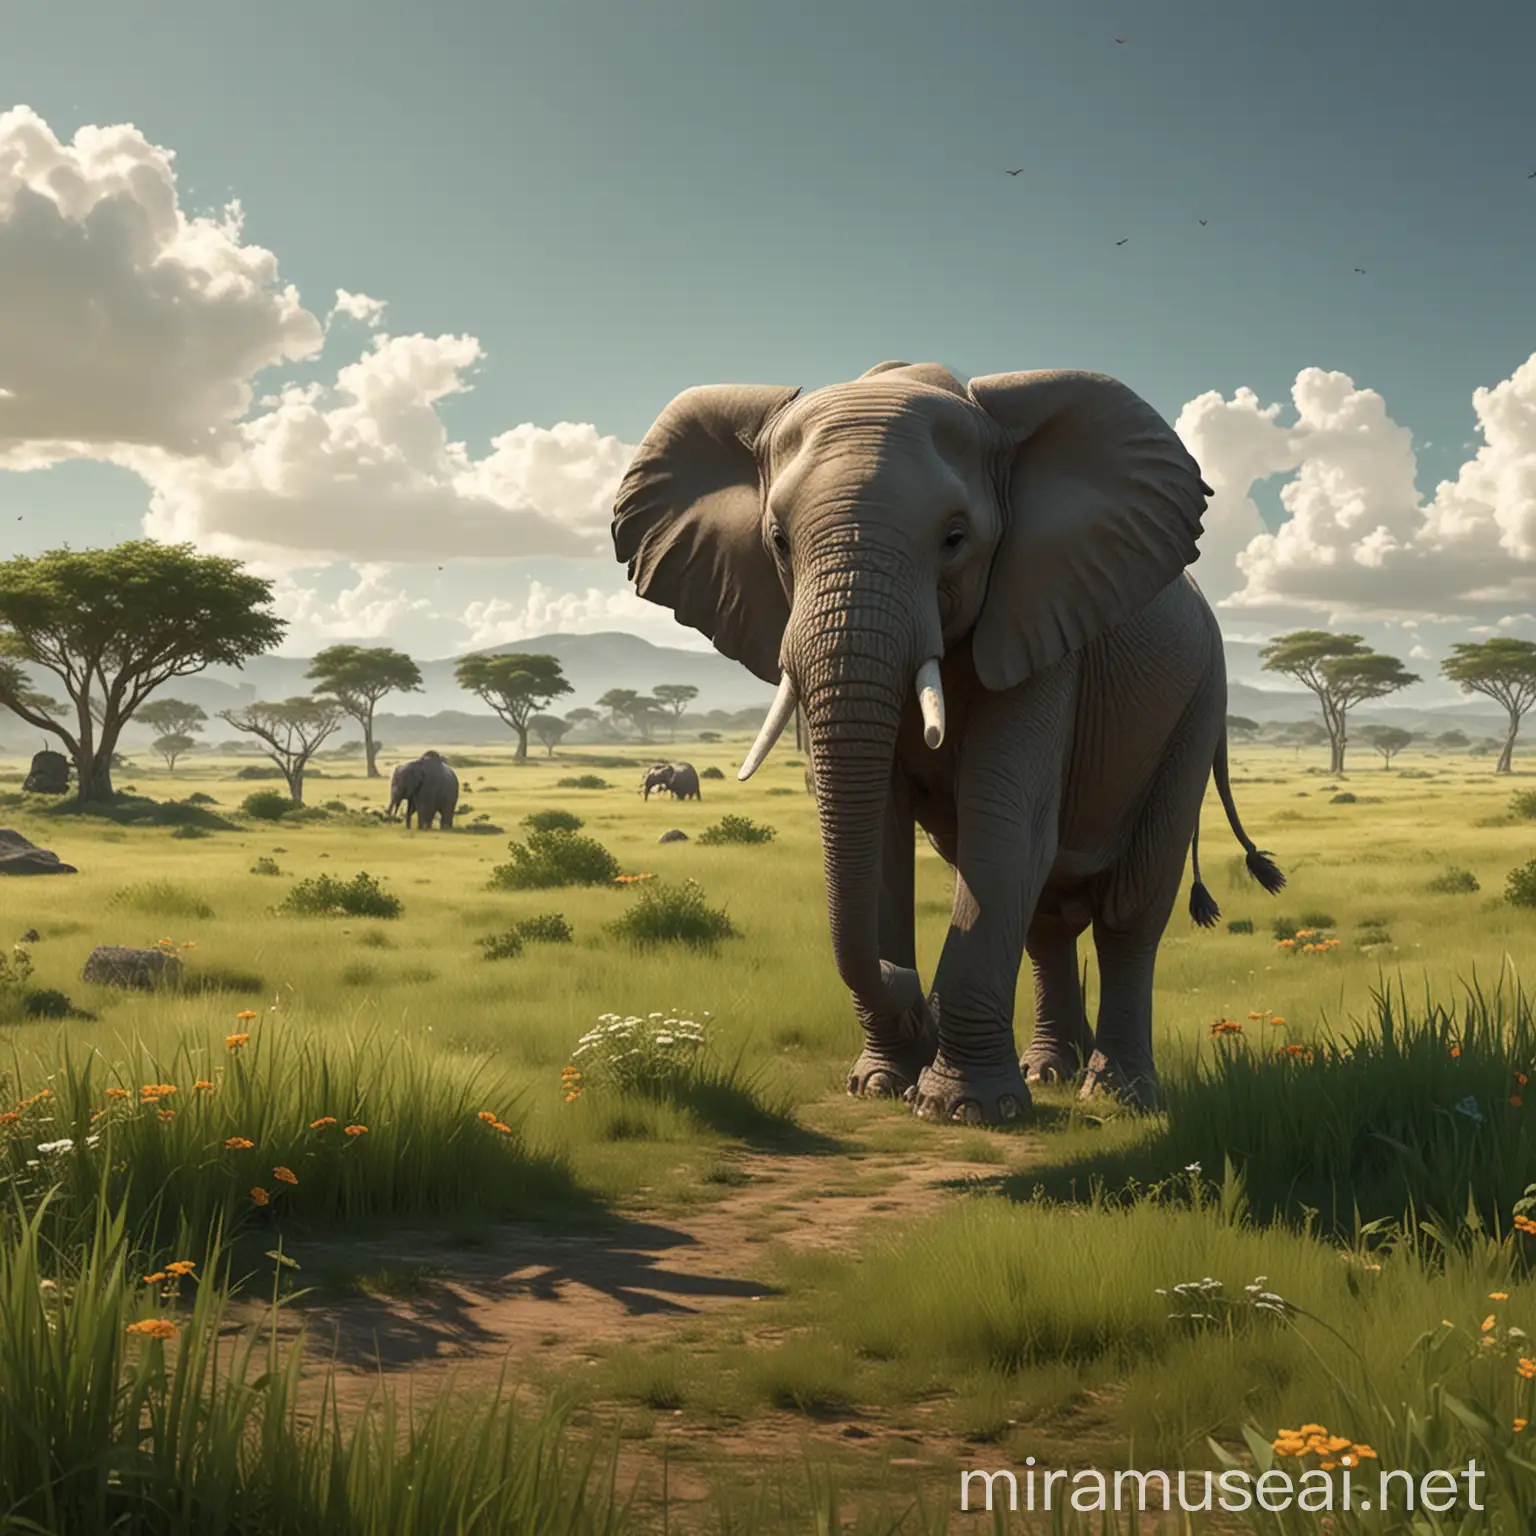 Joyful Elephant Trumpeting in Vibrant Grassland Animation